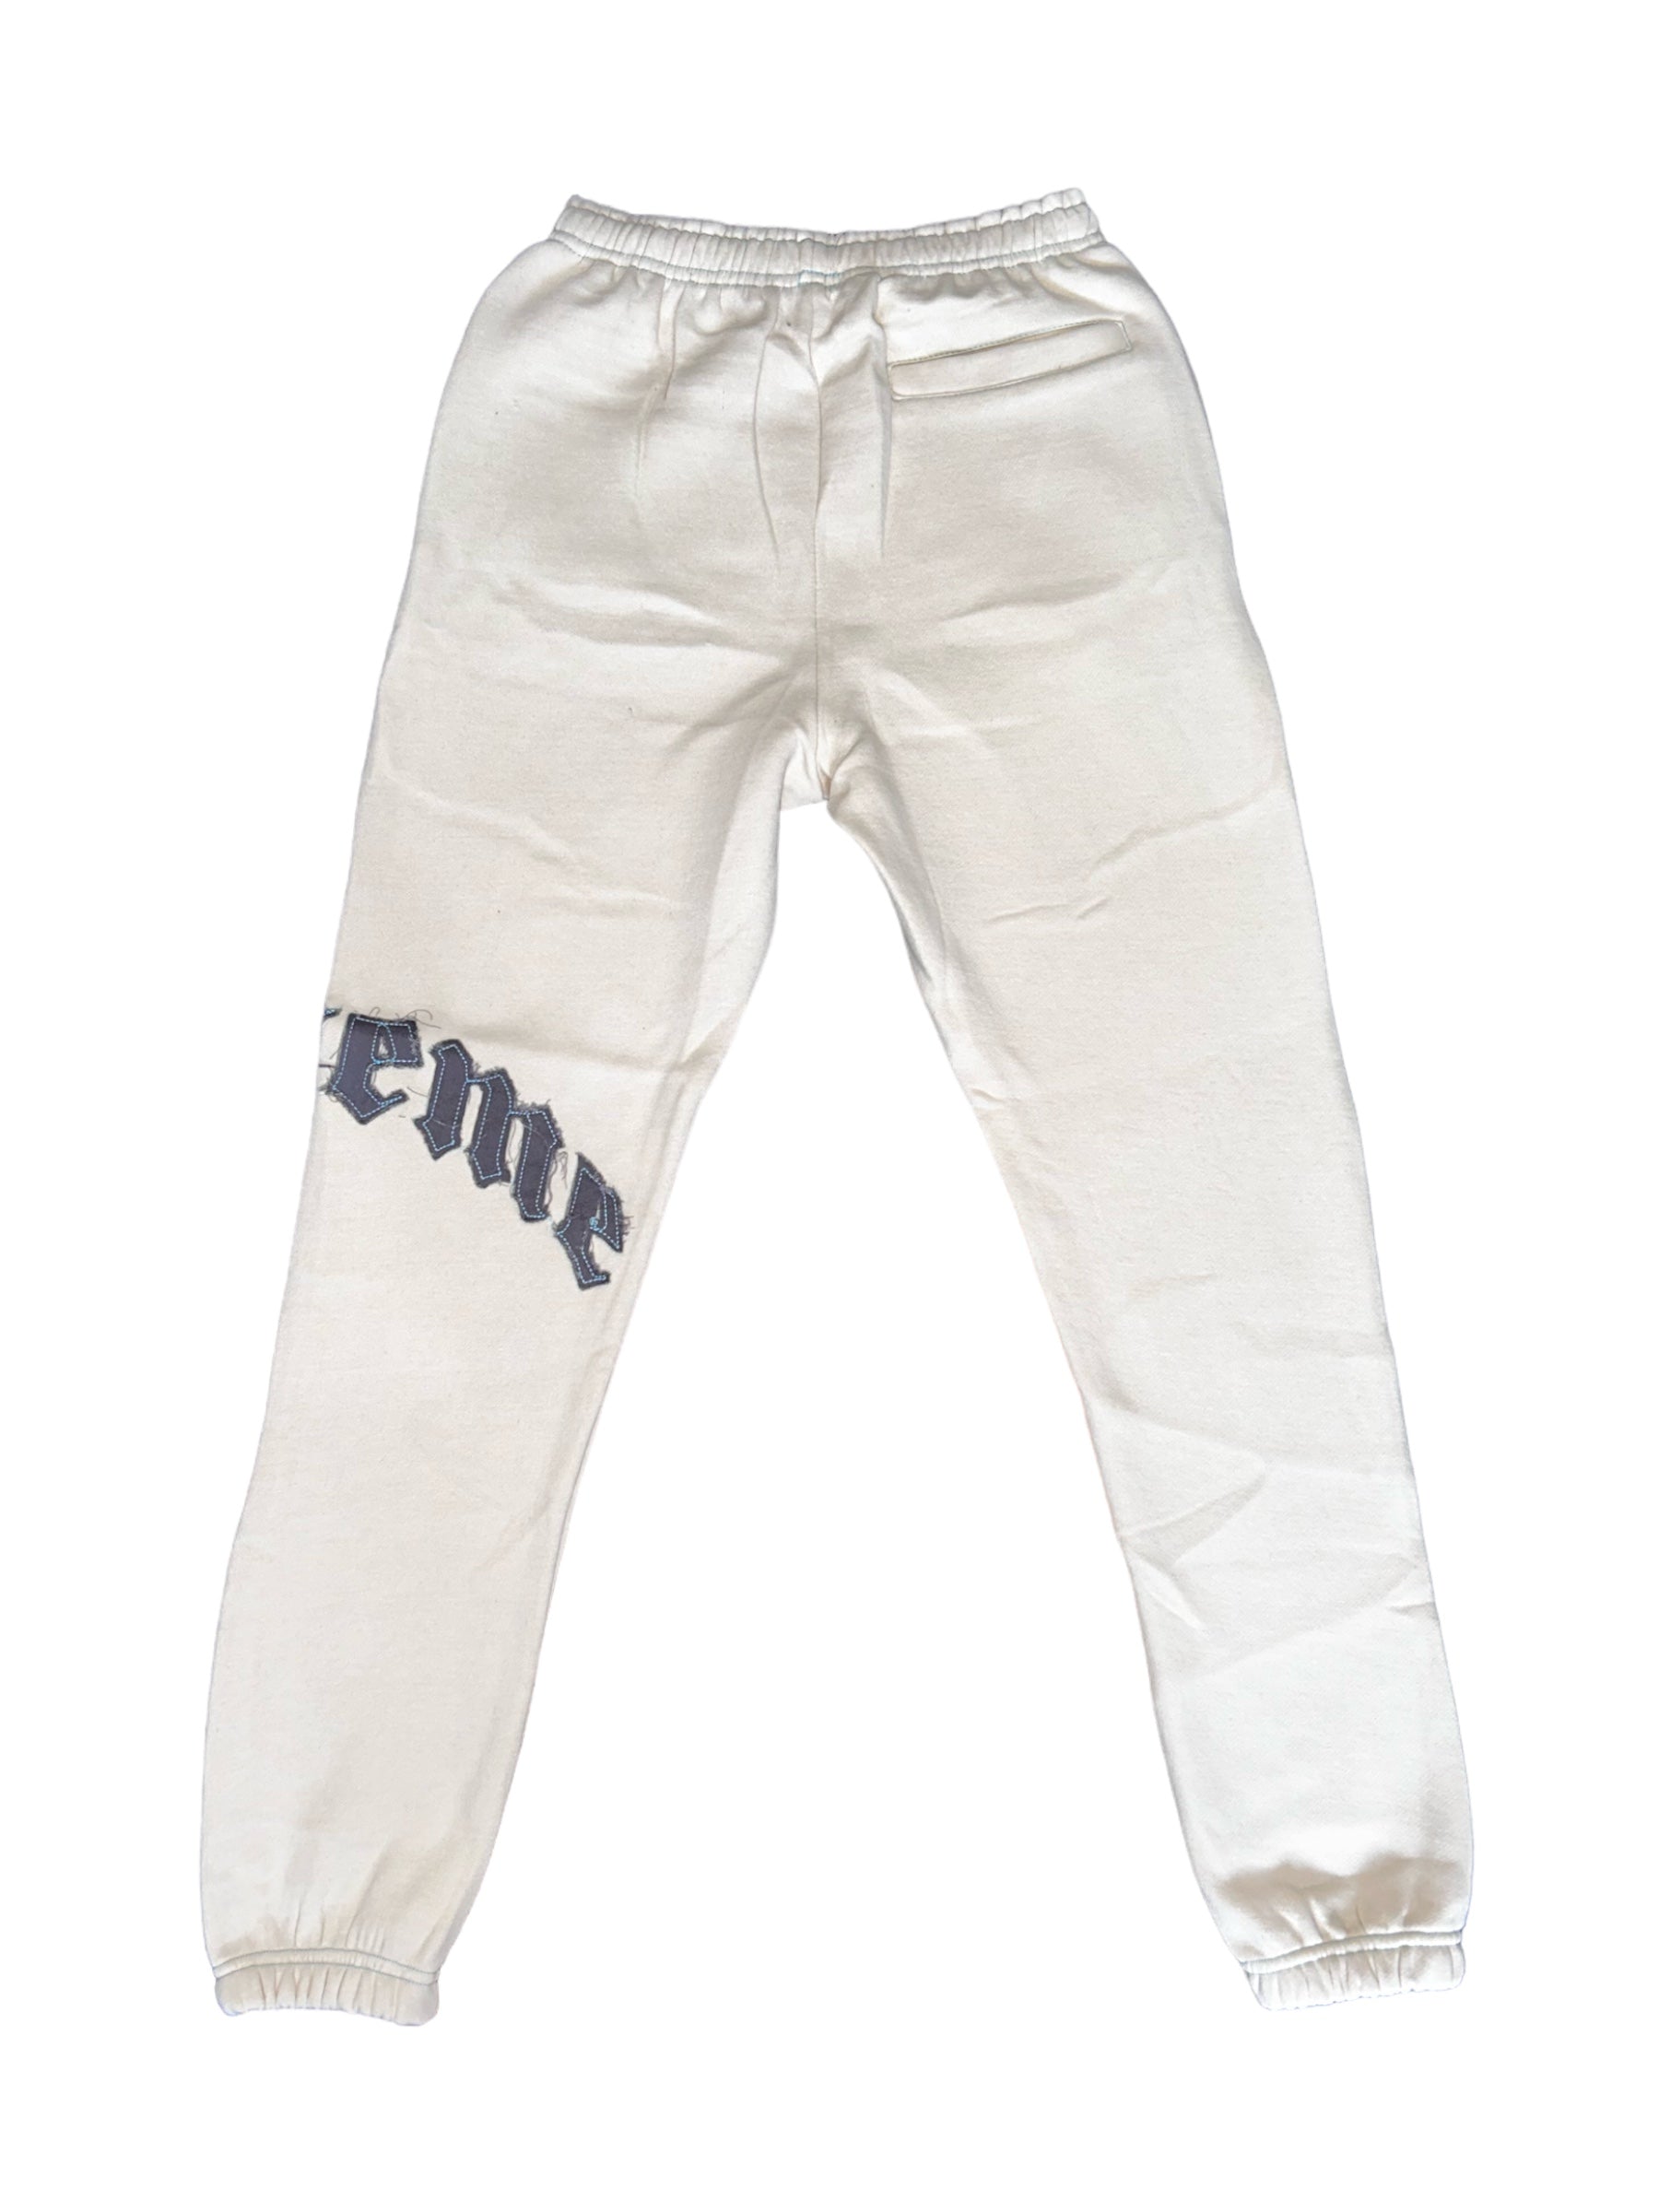 "Scheme" Distressed Sweatpants  - Off White